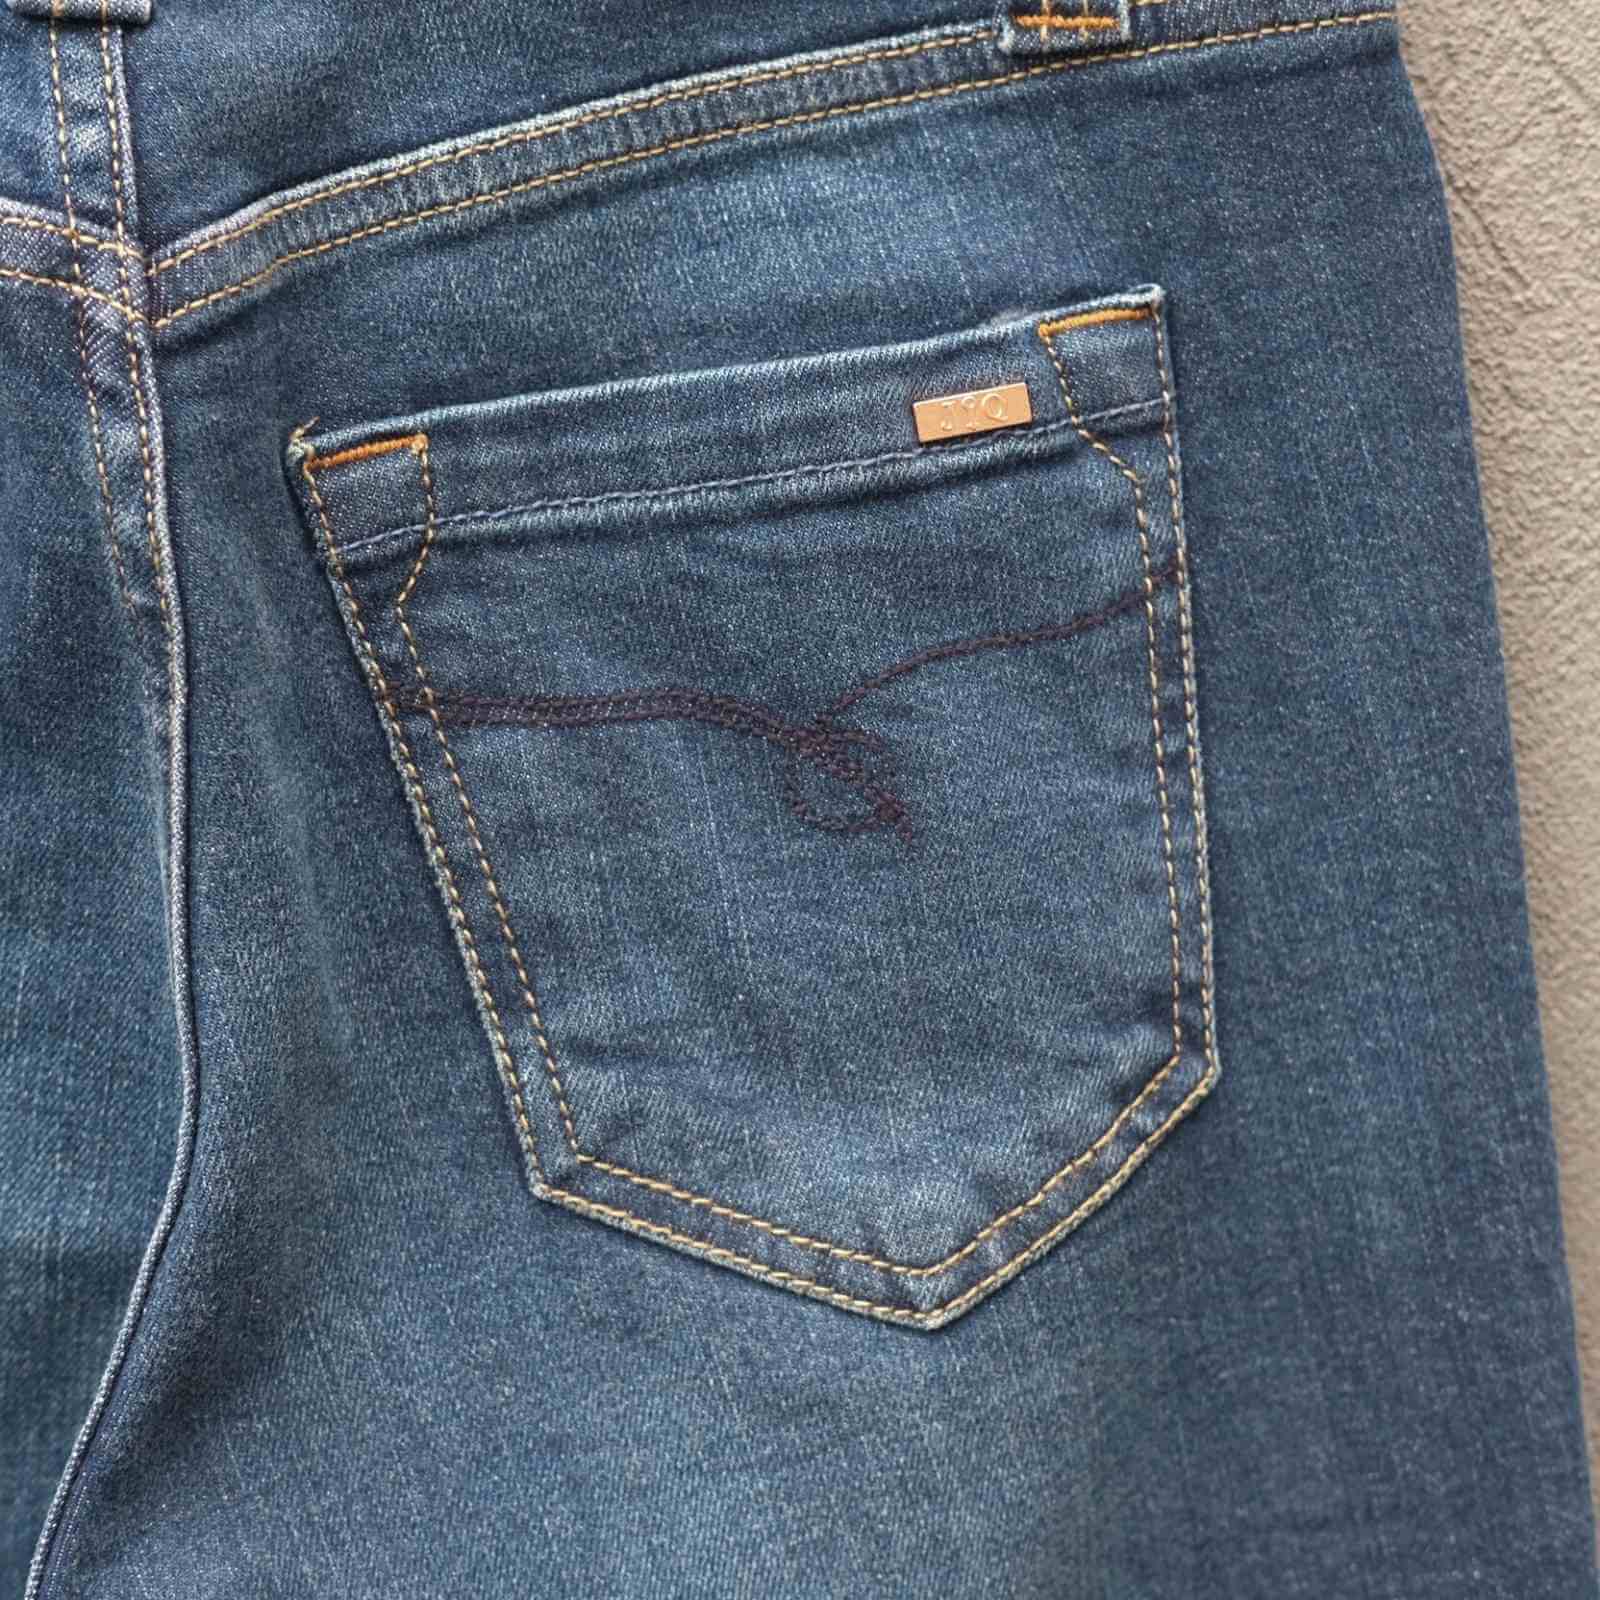 Jonny Q jeans forvasket blå baglomme detalje